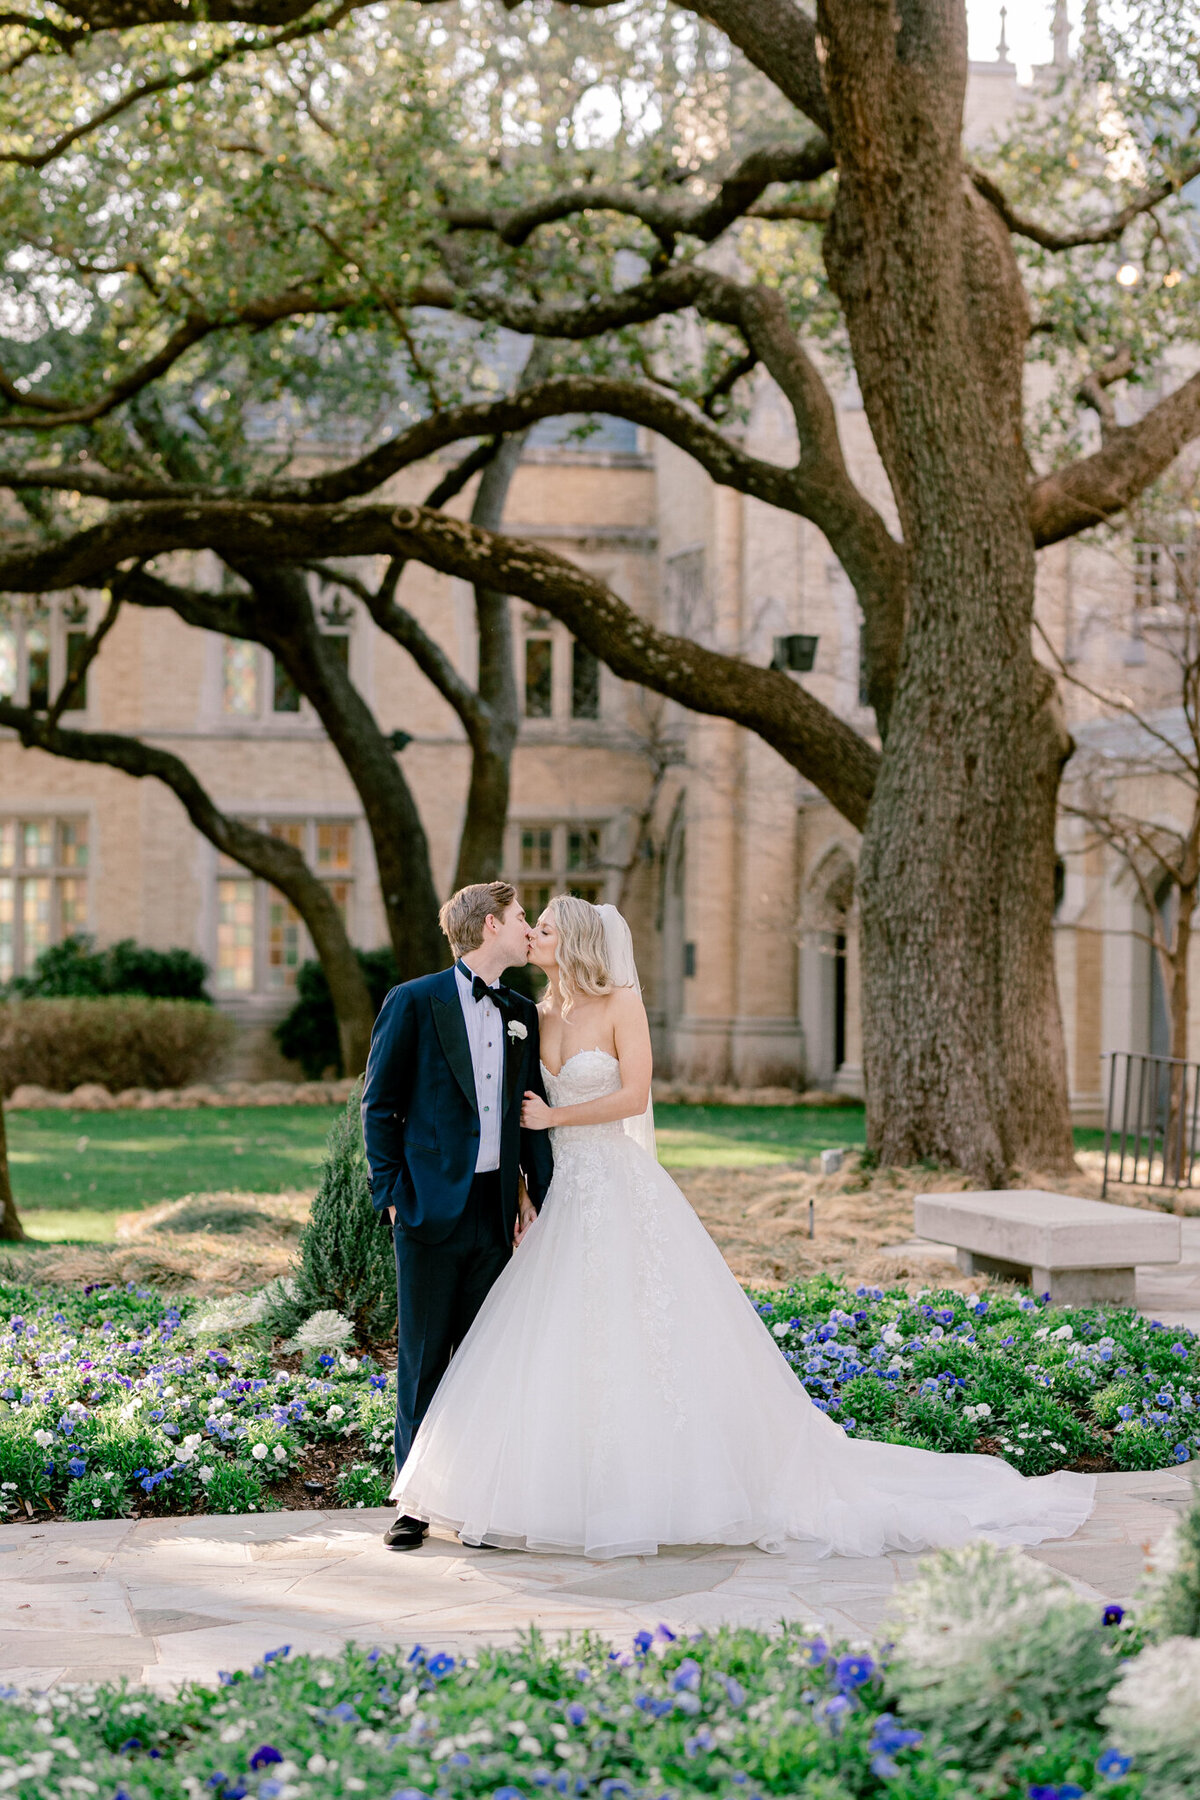 Shelby & Thomas's Wedding at HPUMC The Room on Main | Dallas Wedding Photographer | Sami Kathryn Photography-163